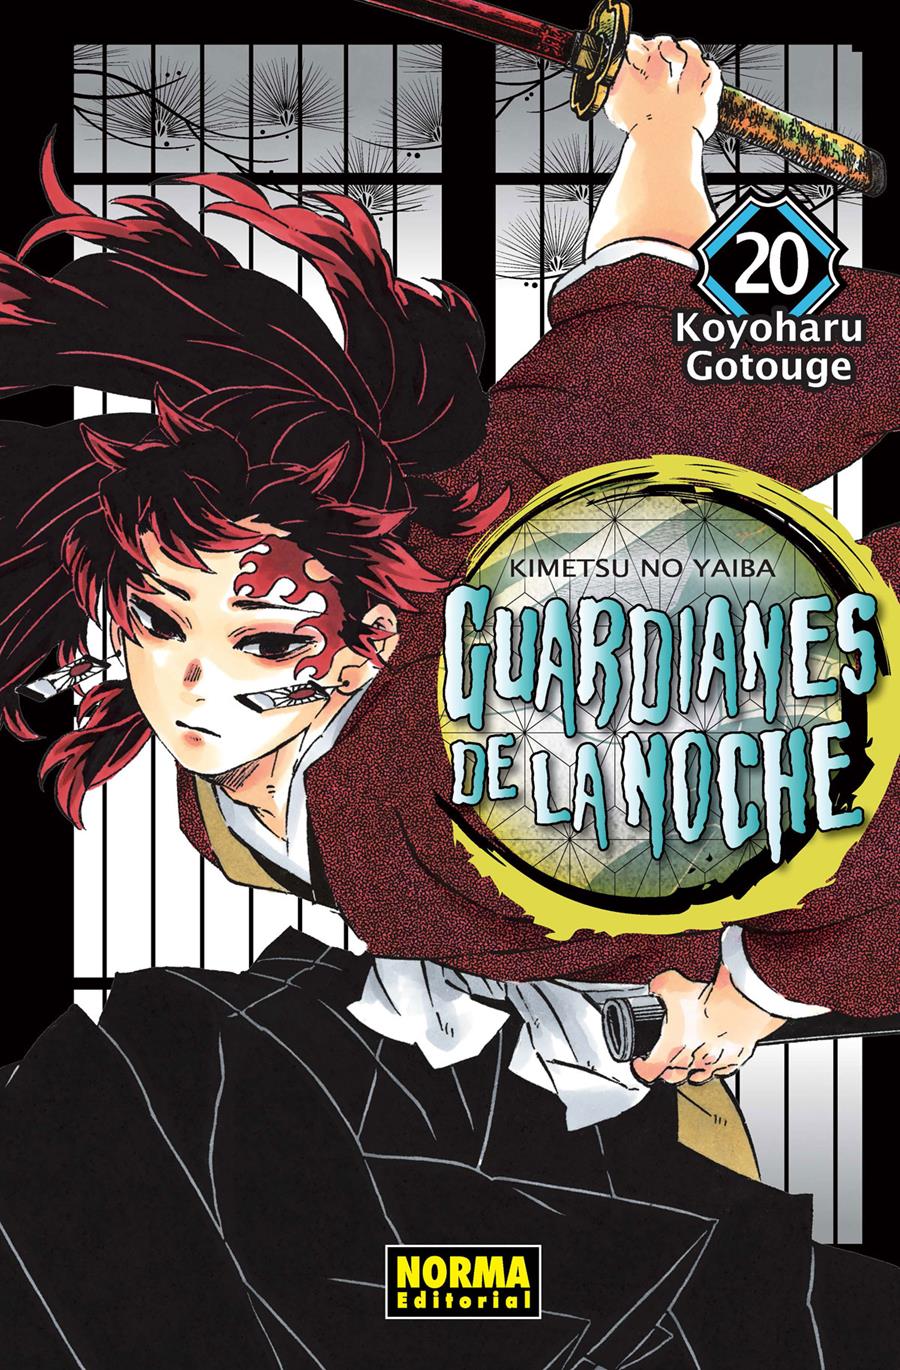 Guardianes de la noche 20 | N0421-NOR13 | Koyoharu Gotouge | Terra de Còmic - Tu tienda de cómics online especializada en cómics, manga y merchandising